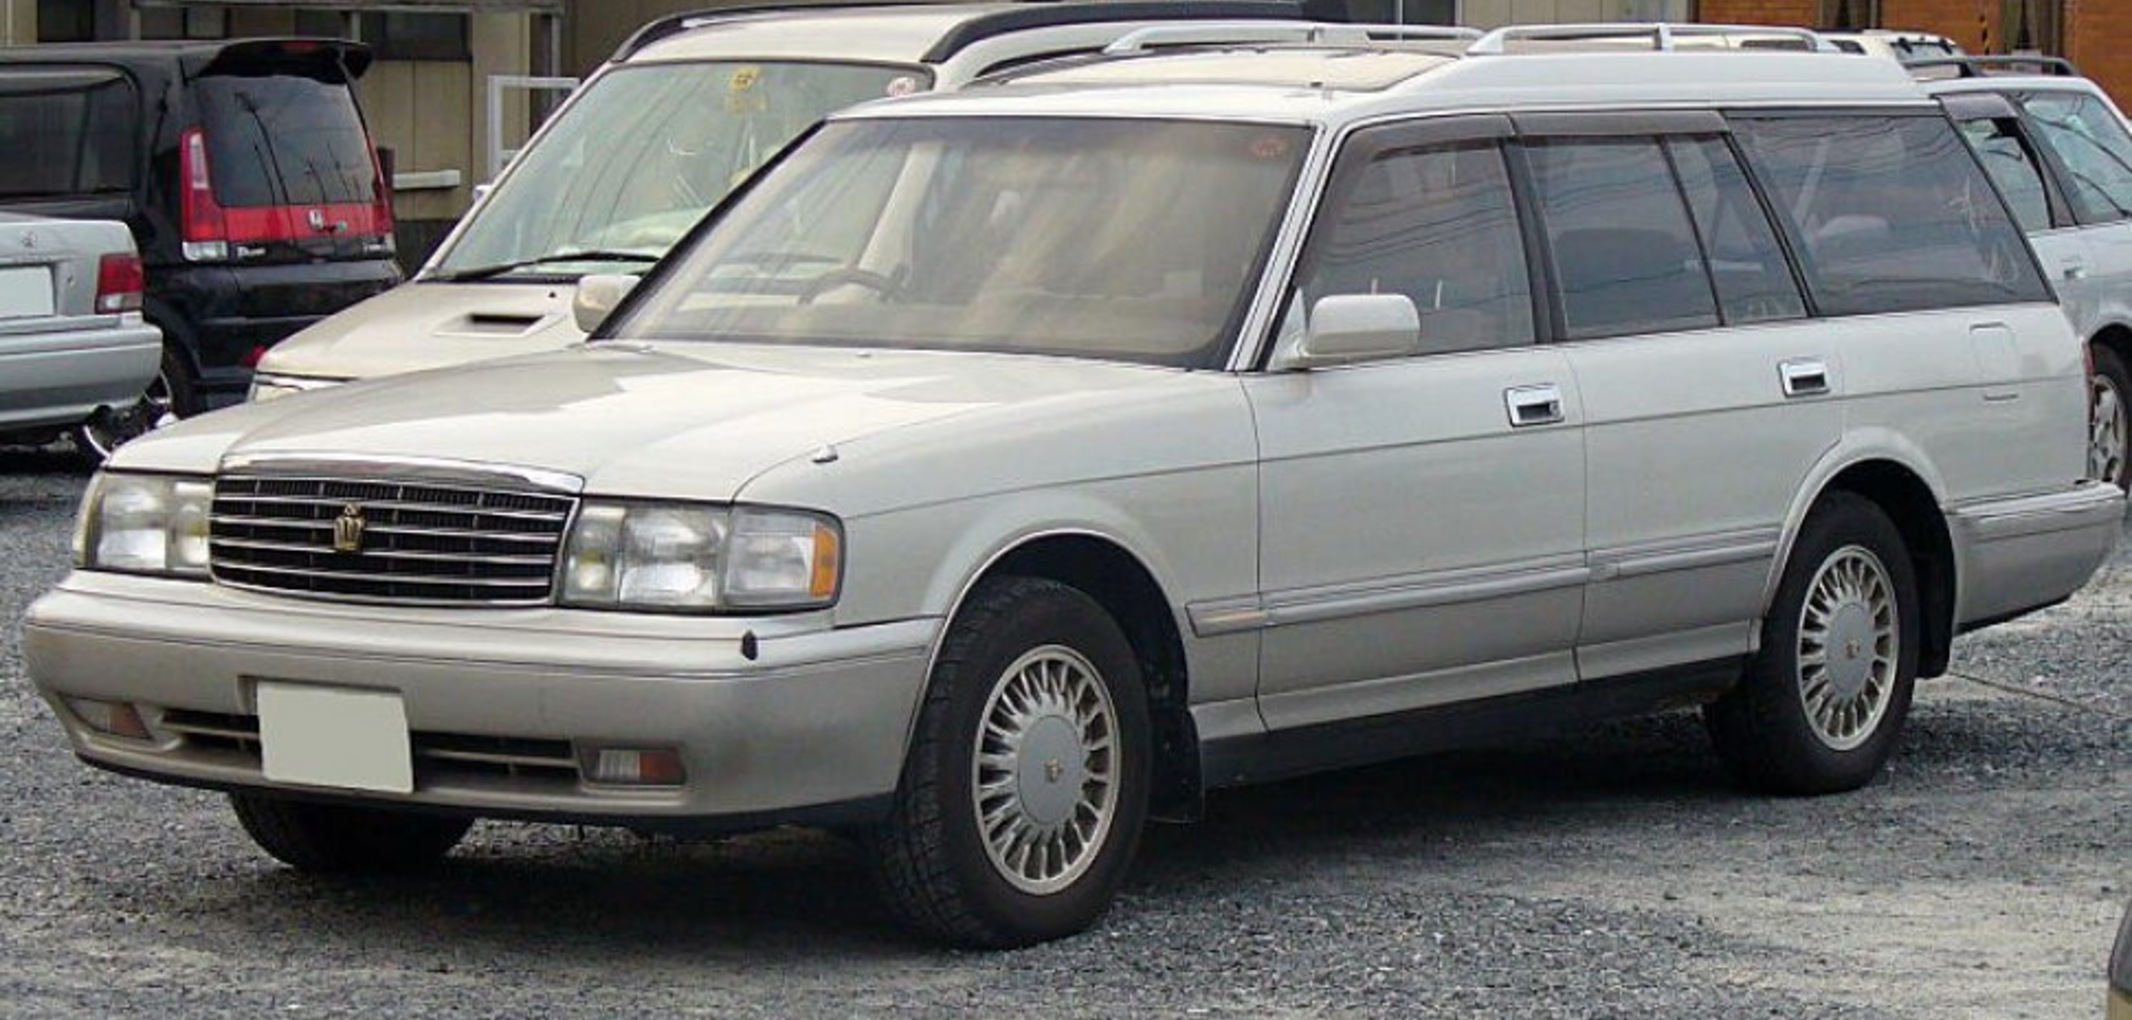 Toyota Crown Wagon (GS130) 2.0 i (135 Hp) 1987, 1988, 1989, 1990, 1991, 1992, 1993, 1994, 1995, 1996, 1997, 1998, 1999 